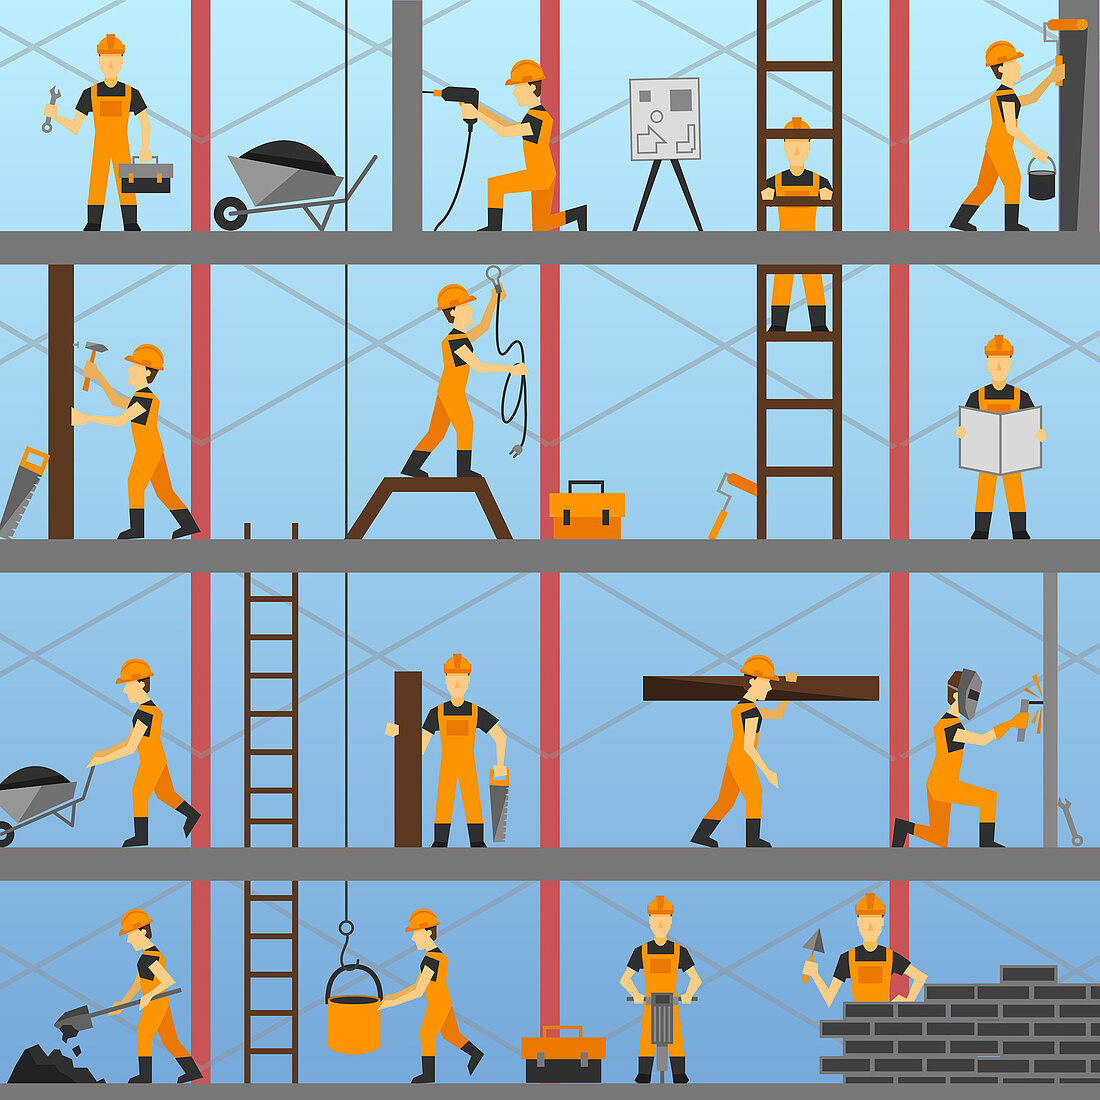 Construction, illustration